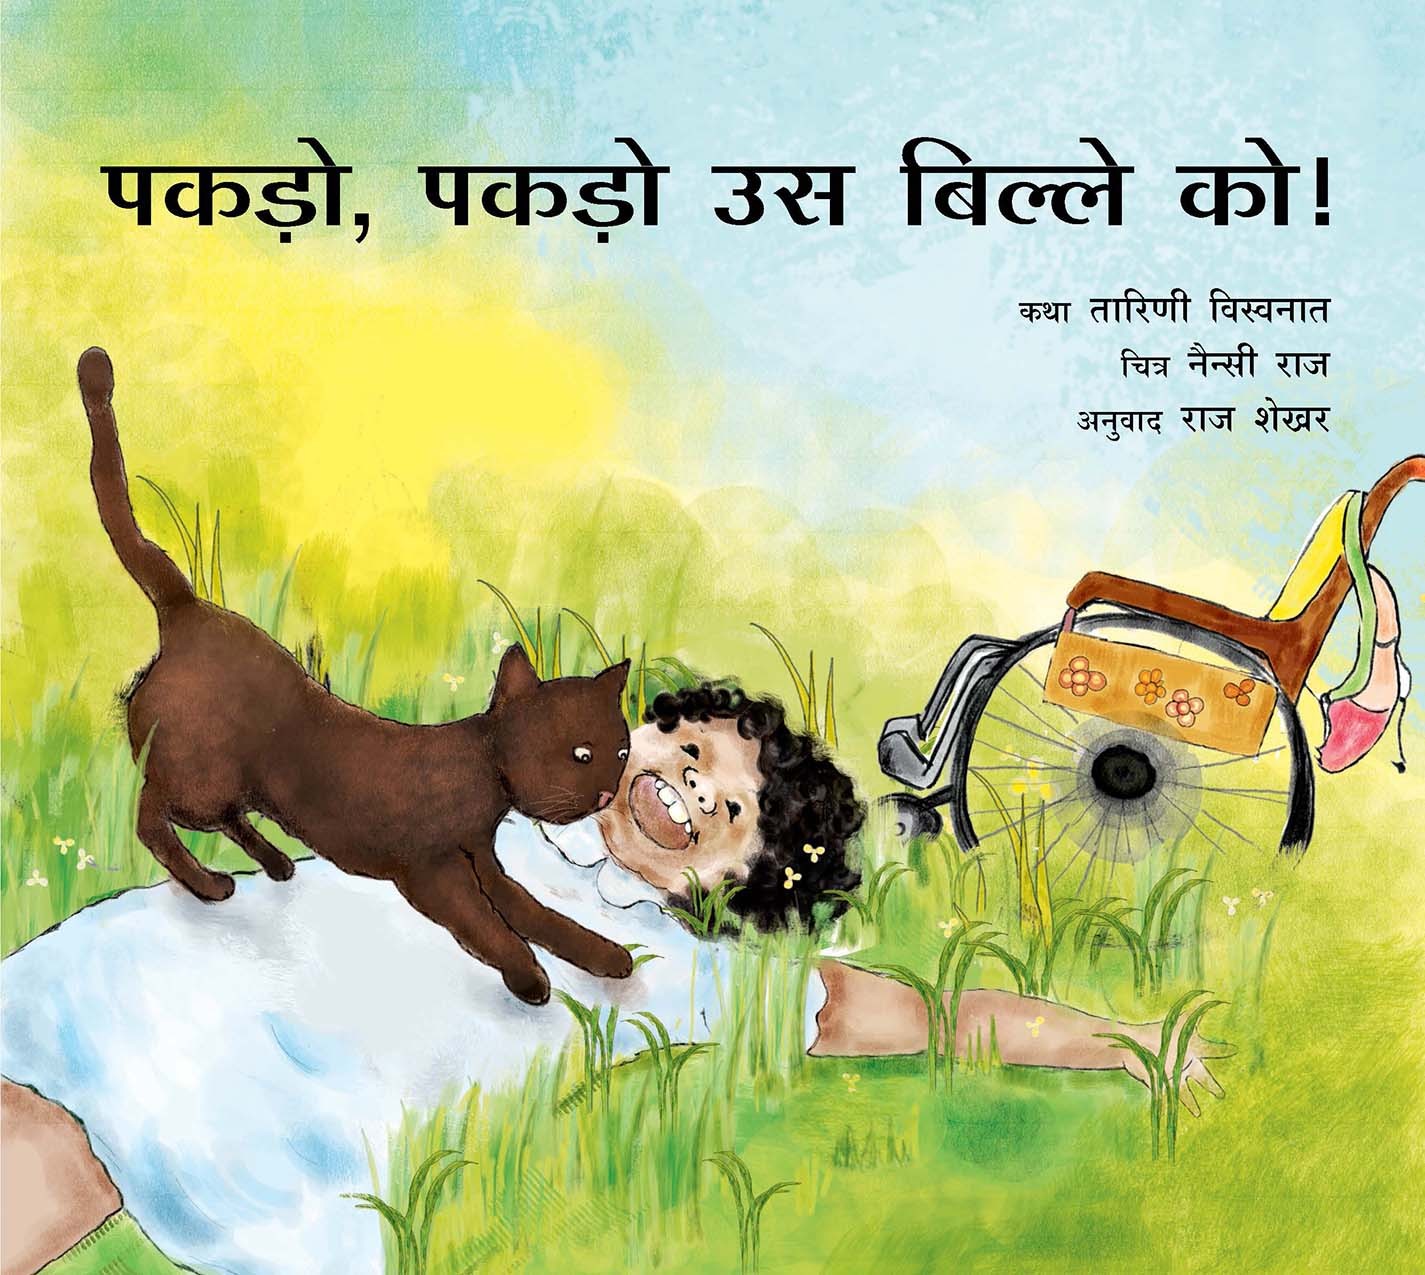 Catch That Cat/Pakdo, Pakdo Uss Bille Ko! (Hindi)